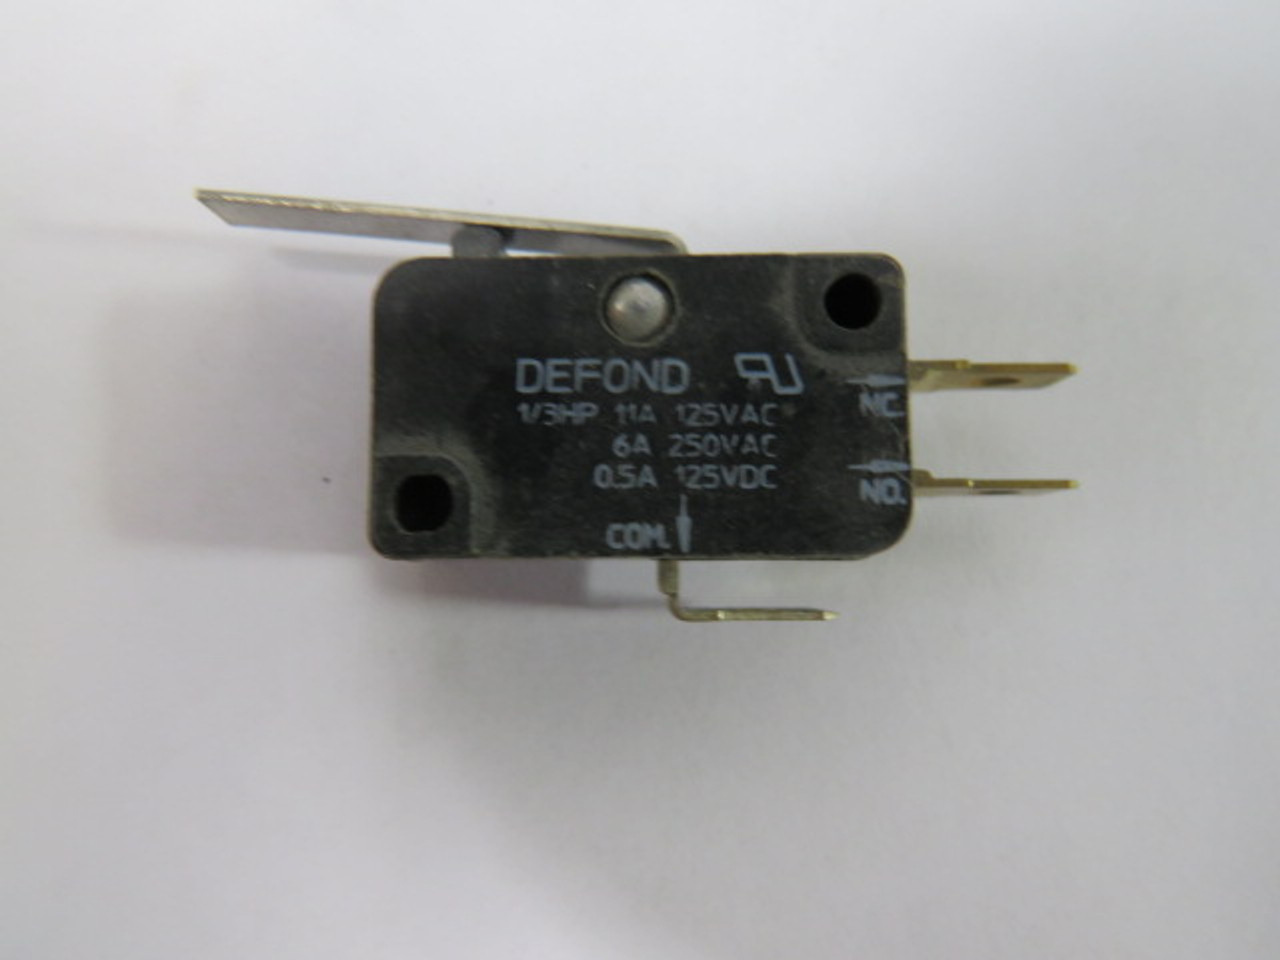 Defond DMA-1211-9-01 Switch 1211 Series 11/6/0.5A 125/250VAC USED